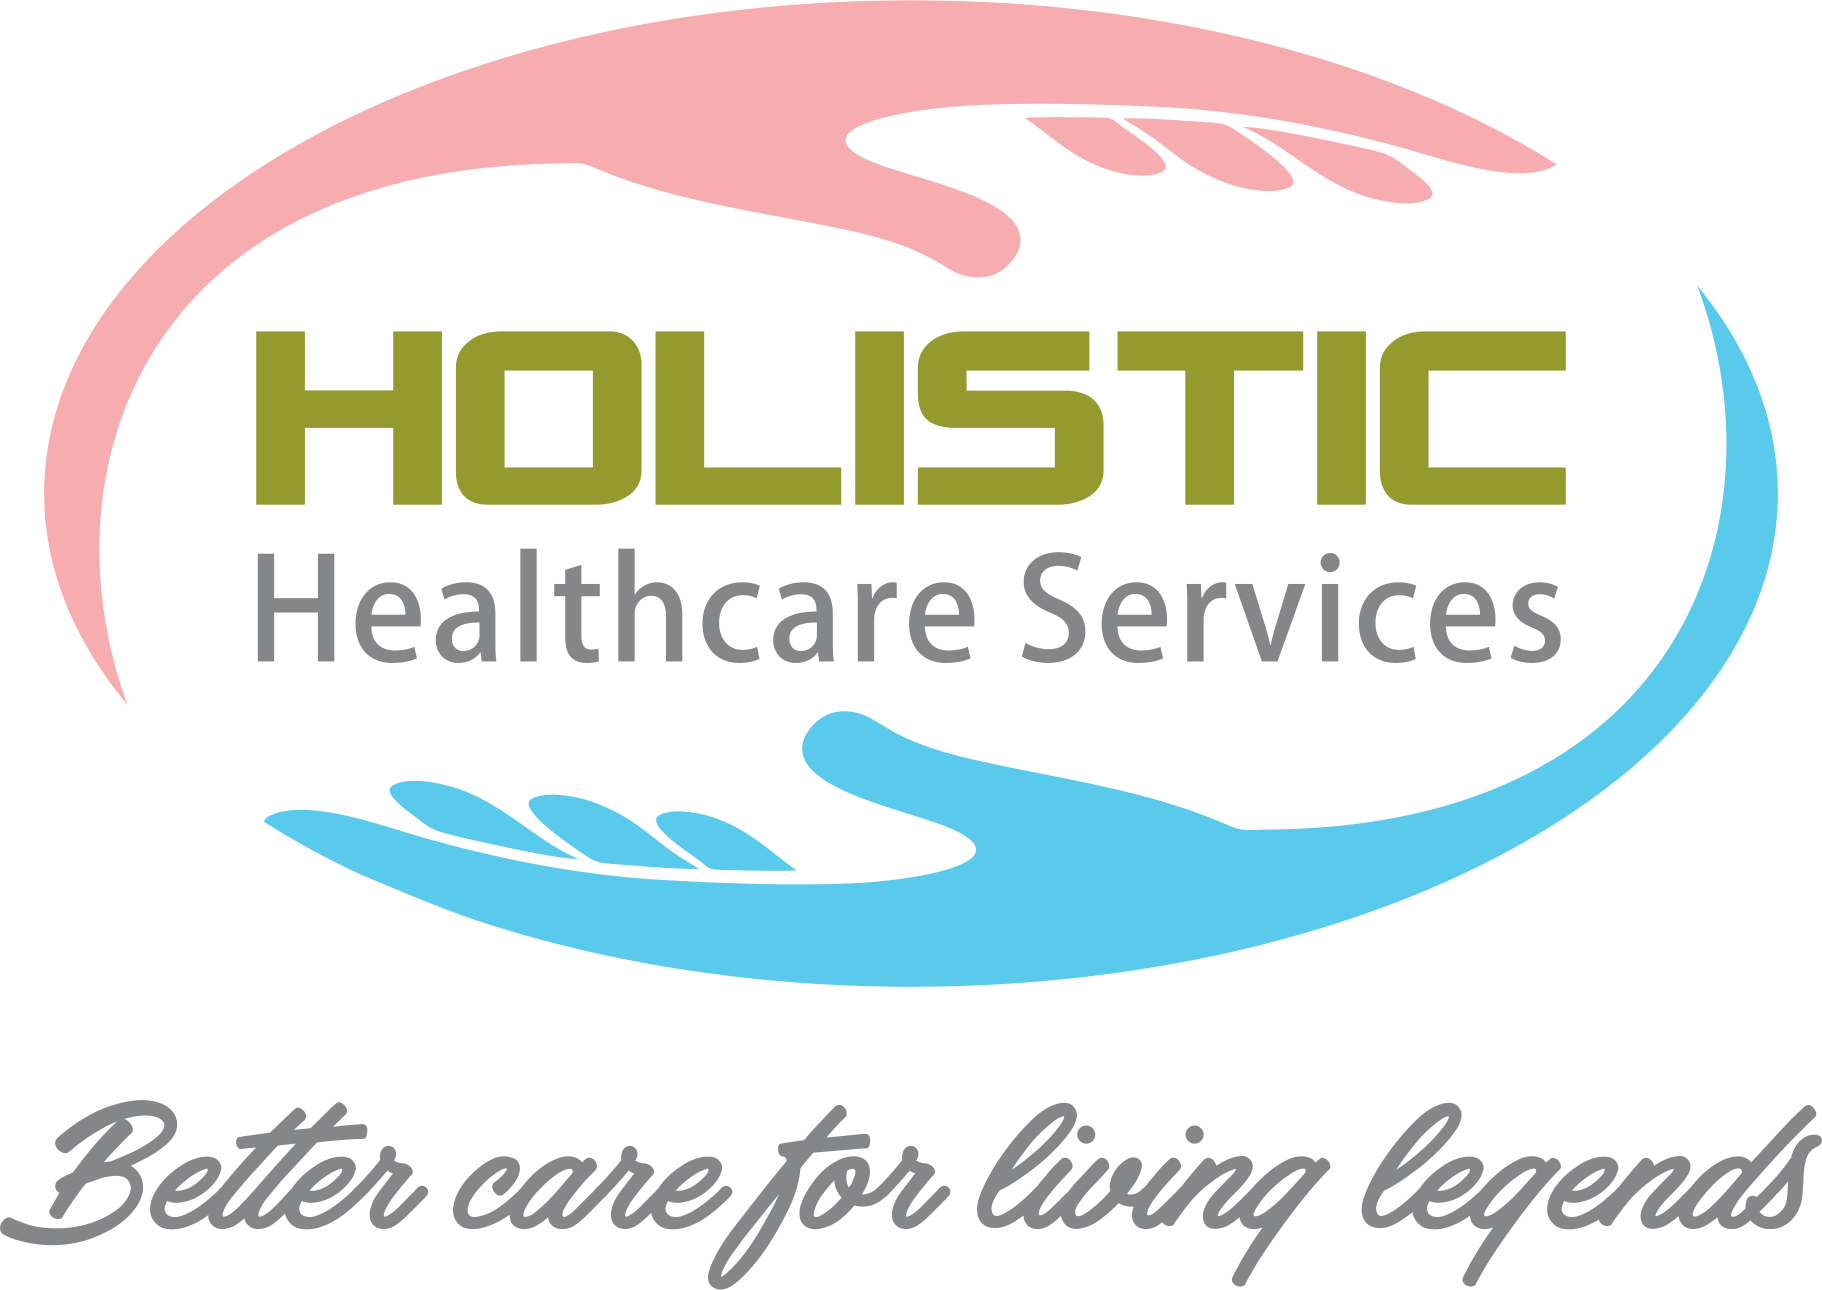 Holistic Healthcare Services